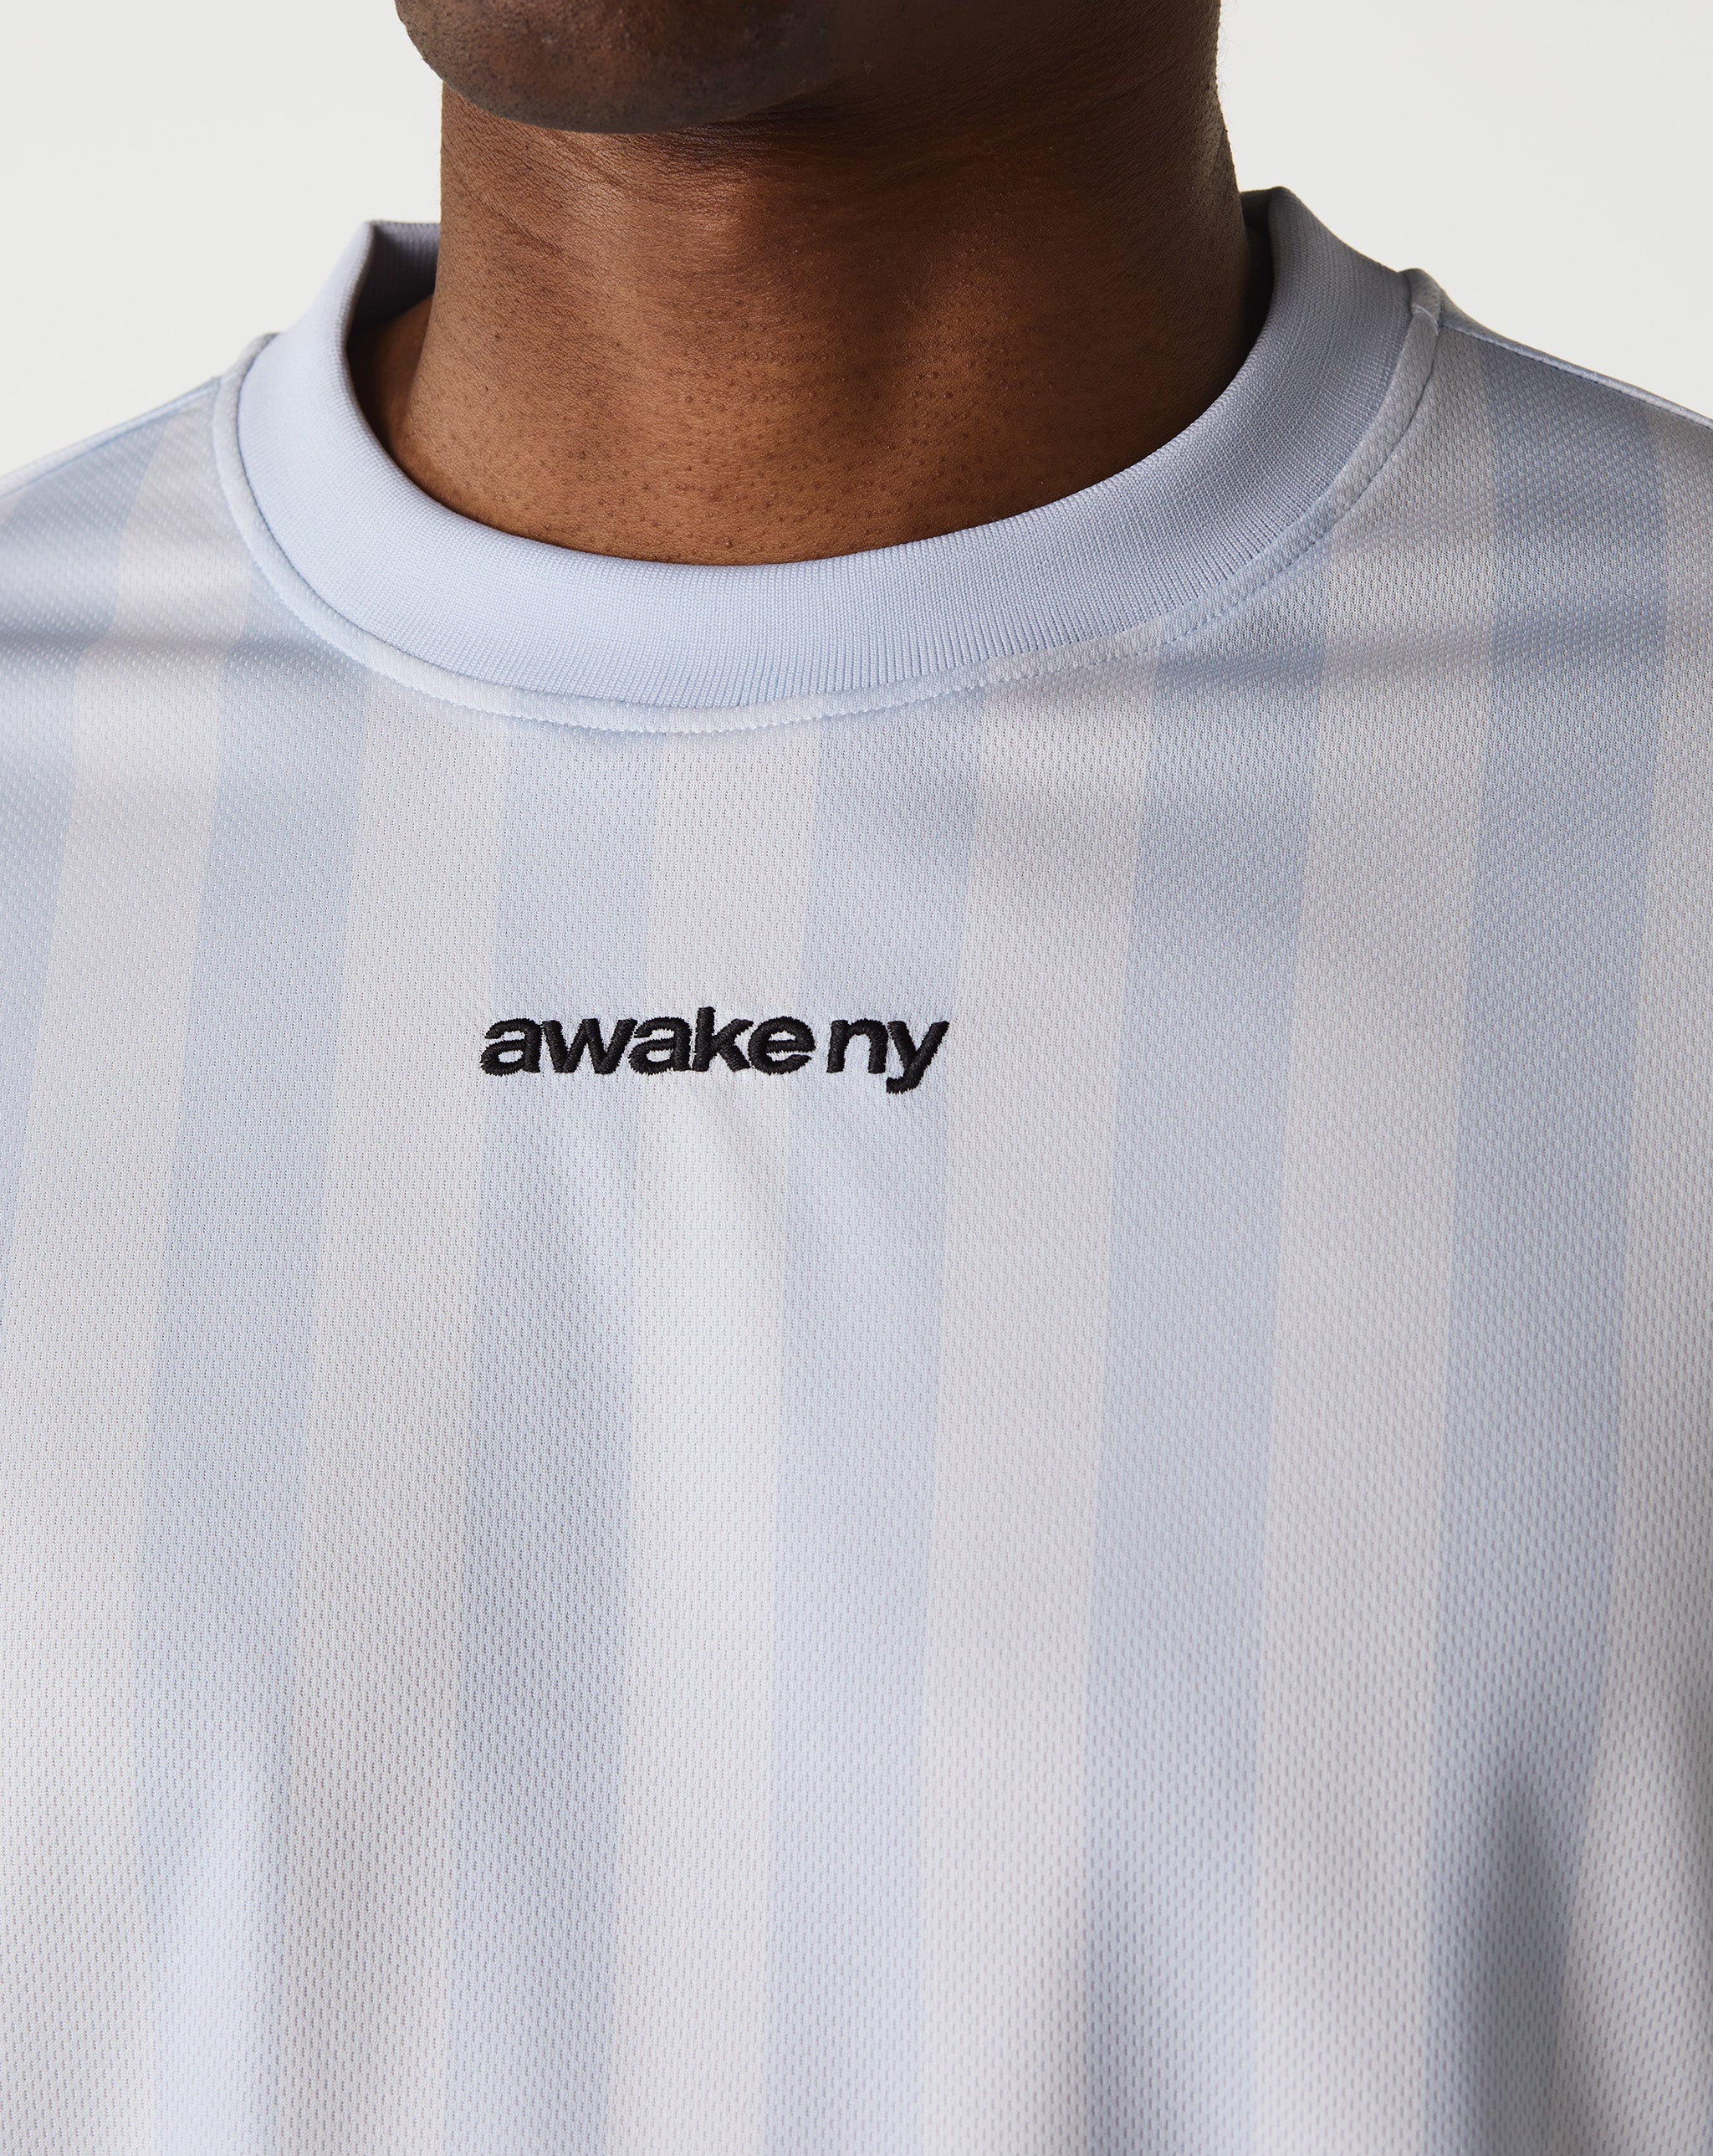 Awake NY Soccer Jersey  - Cheap Cerbe Jordan outlet